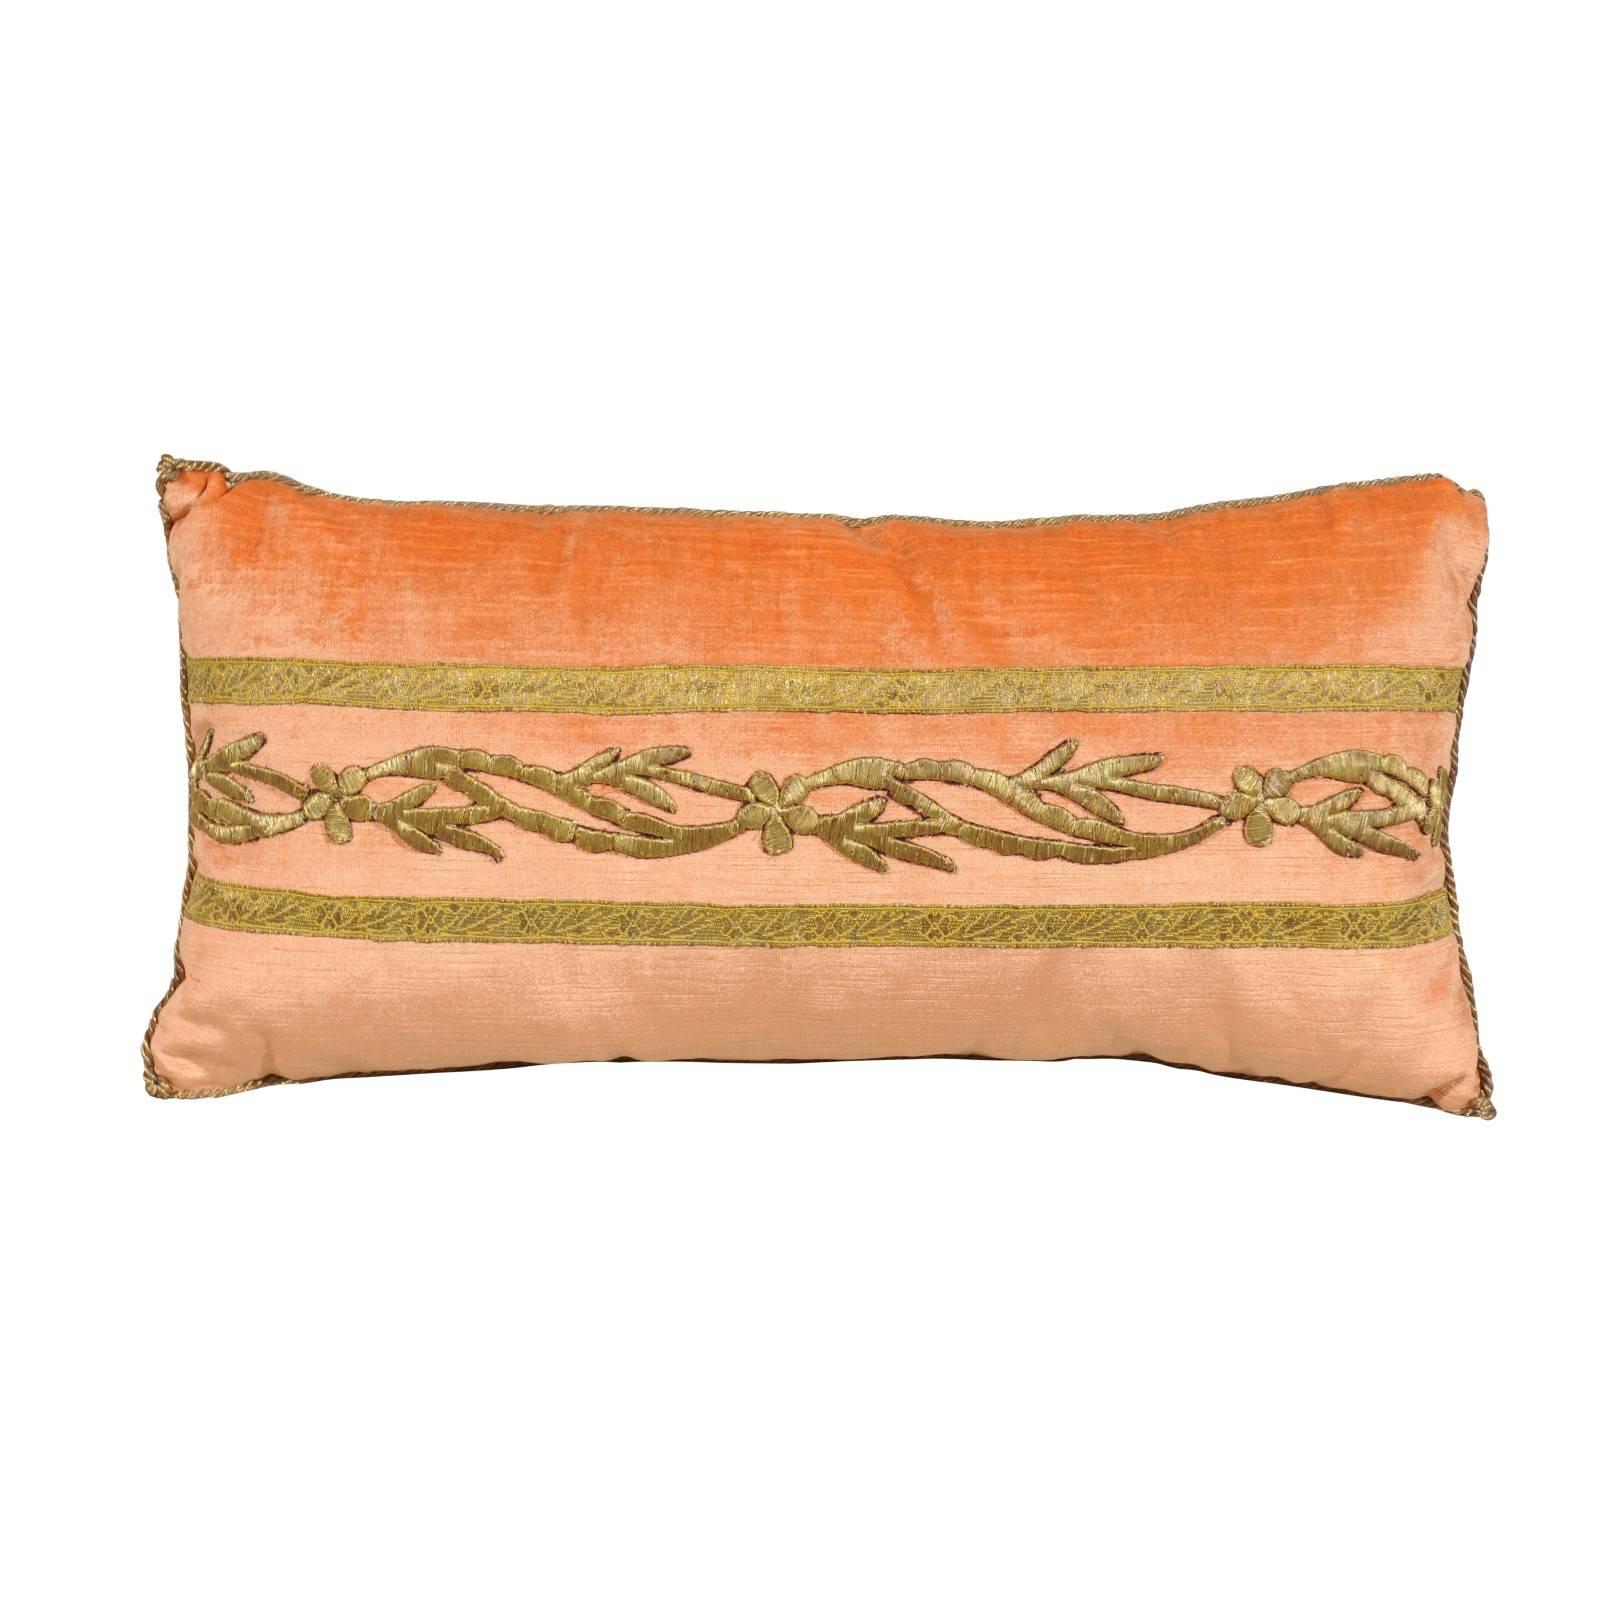 Antique Ottoman Empire Raised Gold Metallic Embroidery on Melon Velvet Pillow